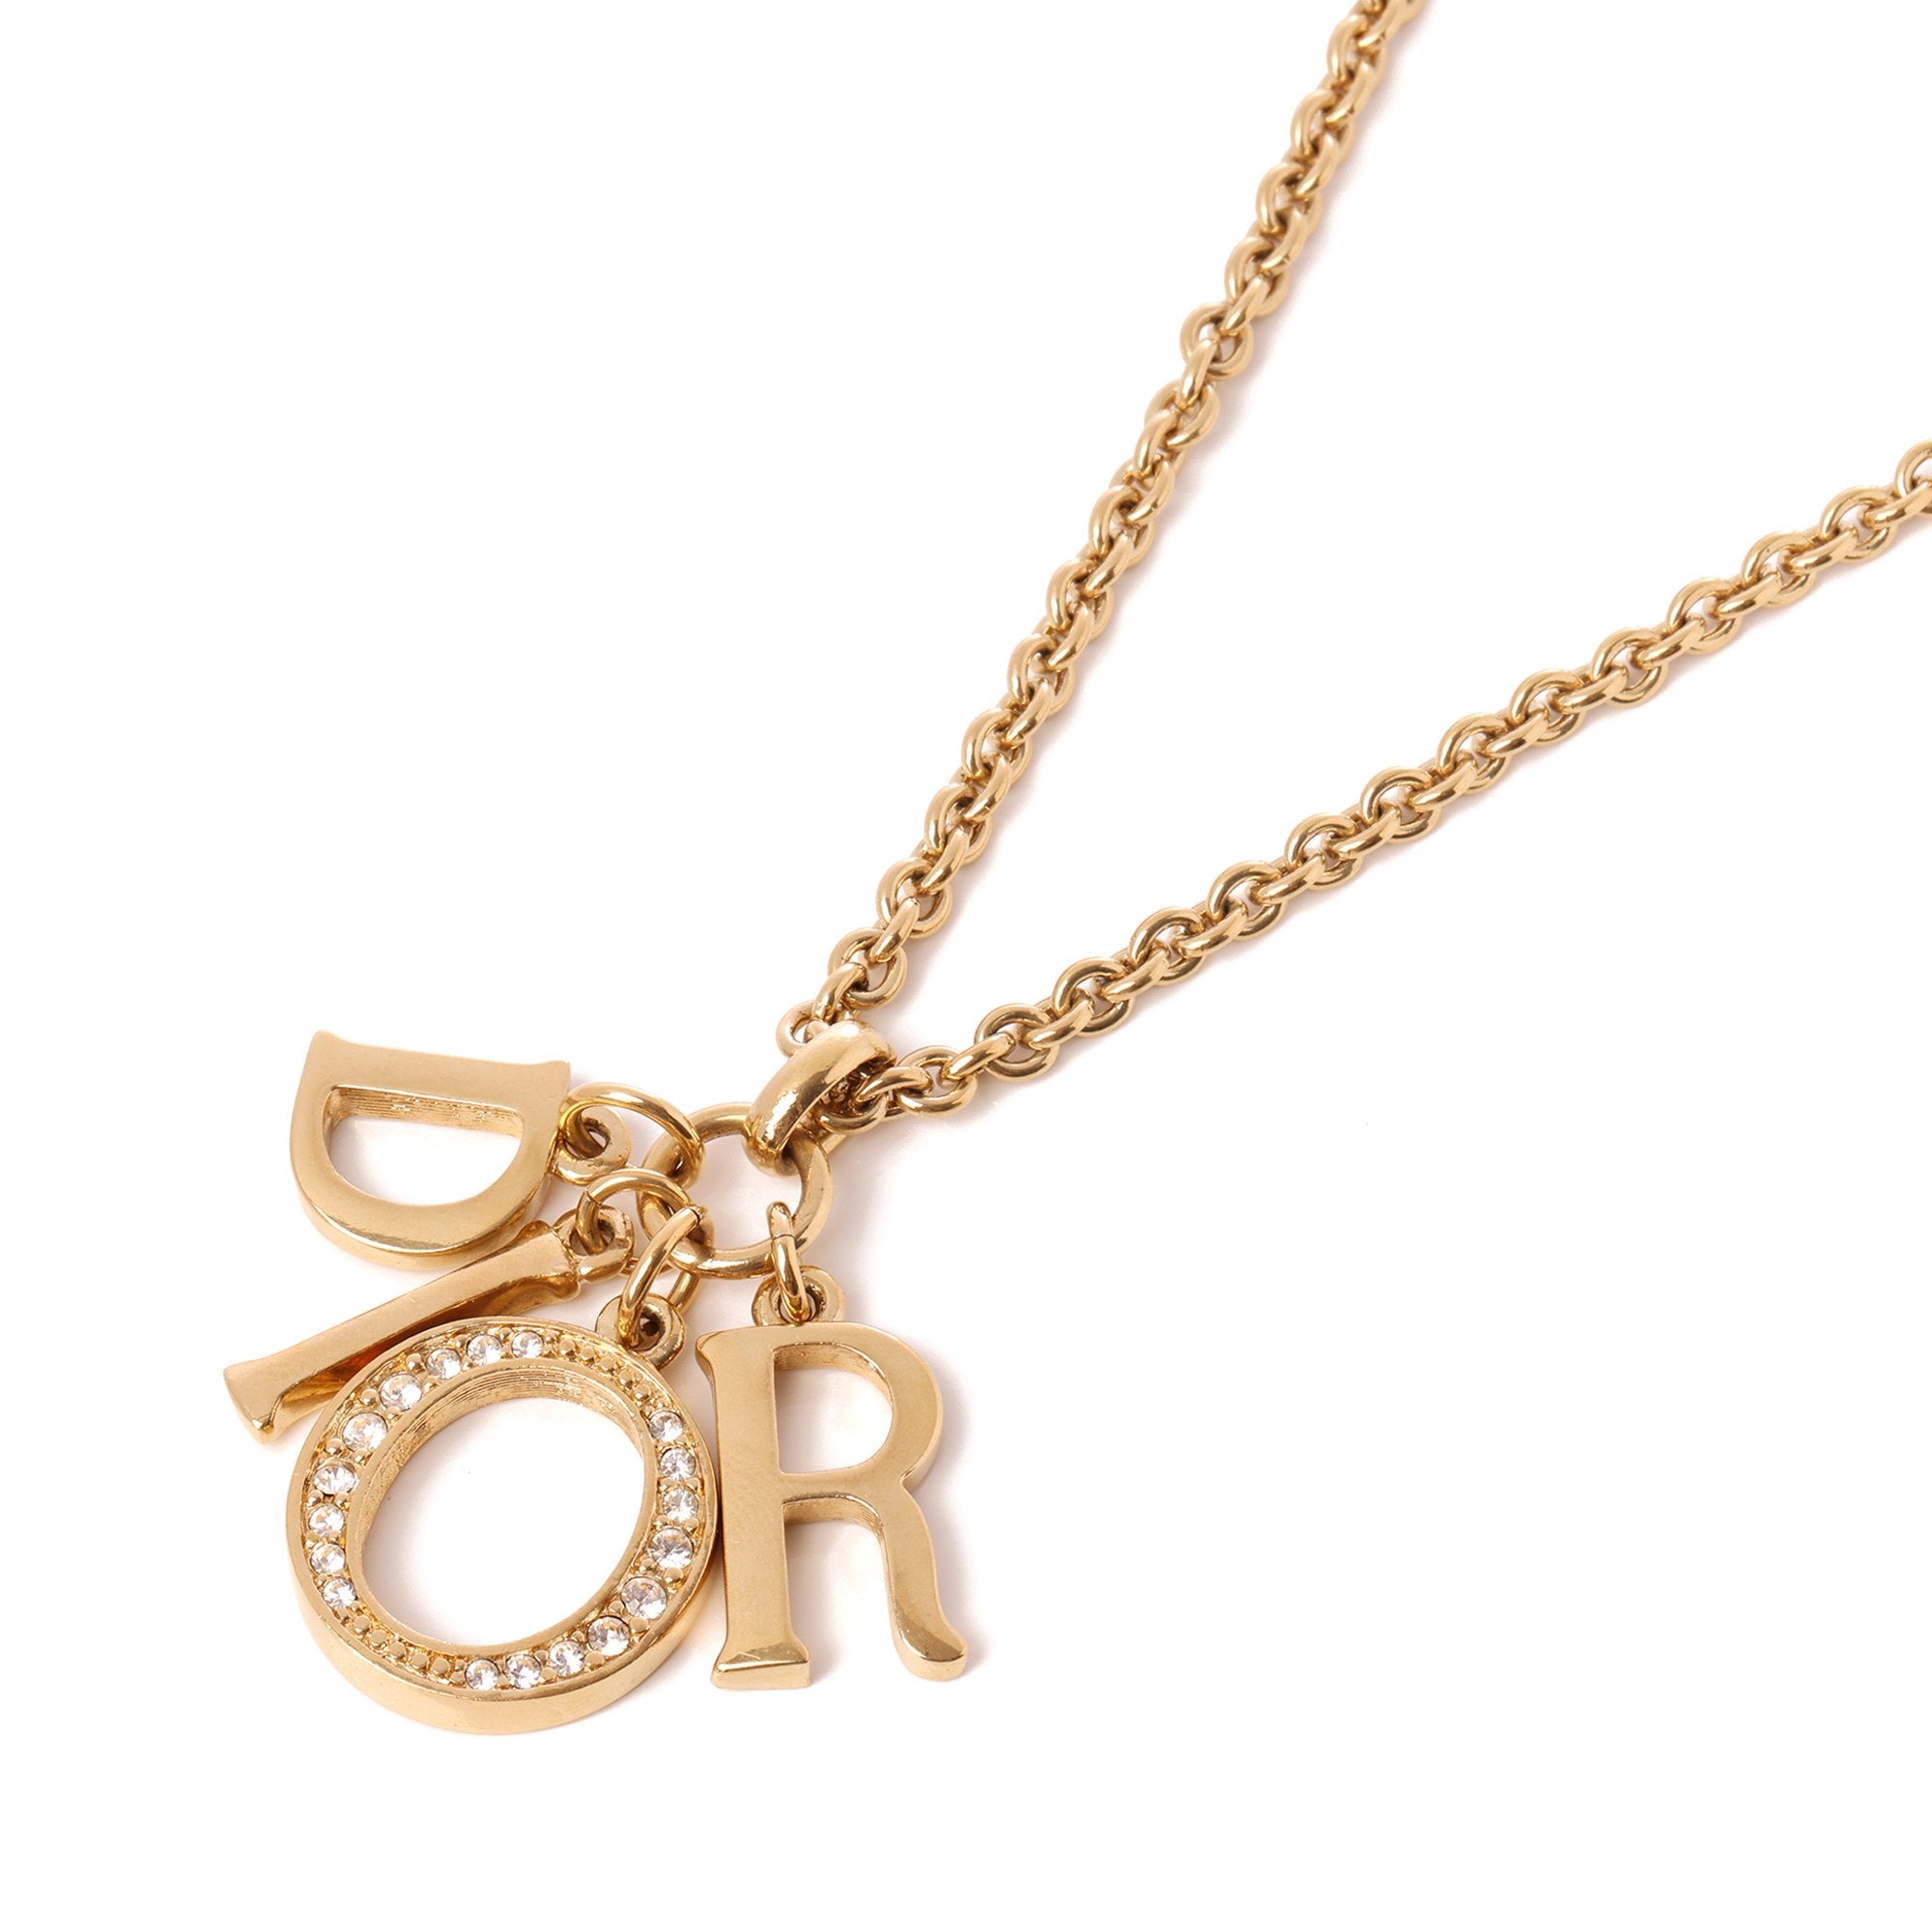 Authentic Dior Repurposed Rhinestones Spellout necklace | Dior jewelry,  Classy jewelry, Dior jewelry necklace